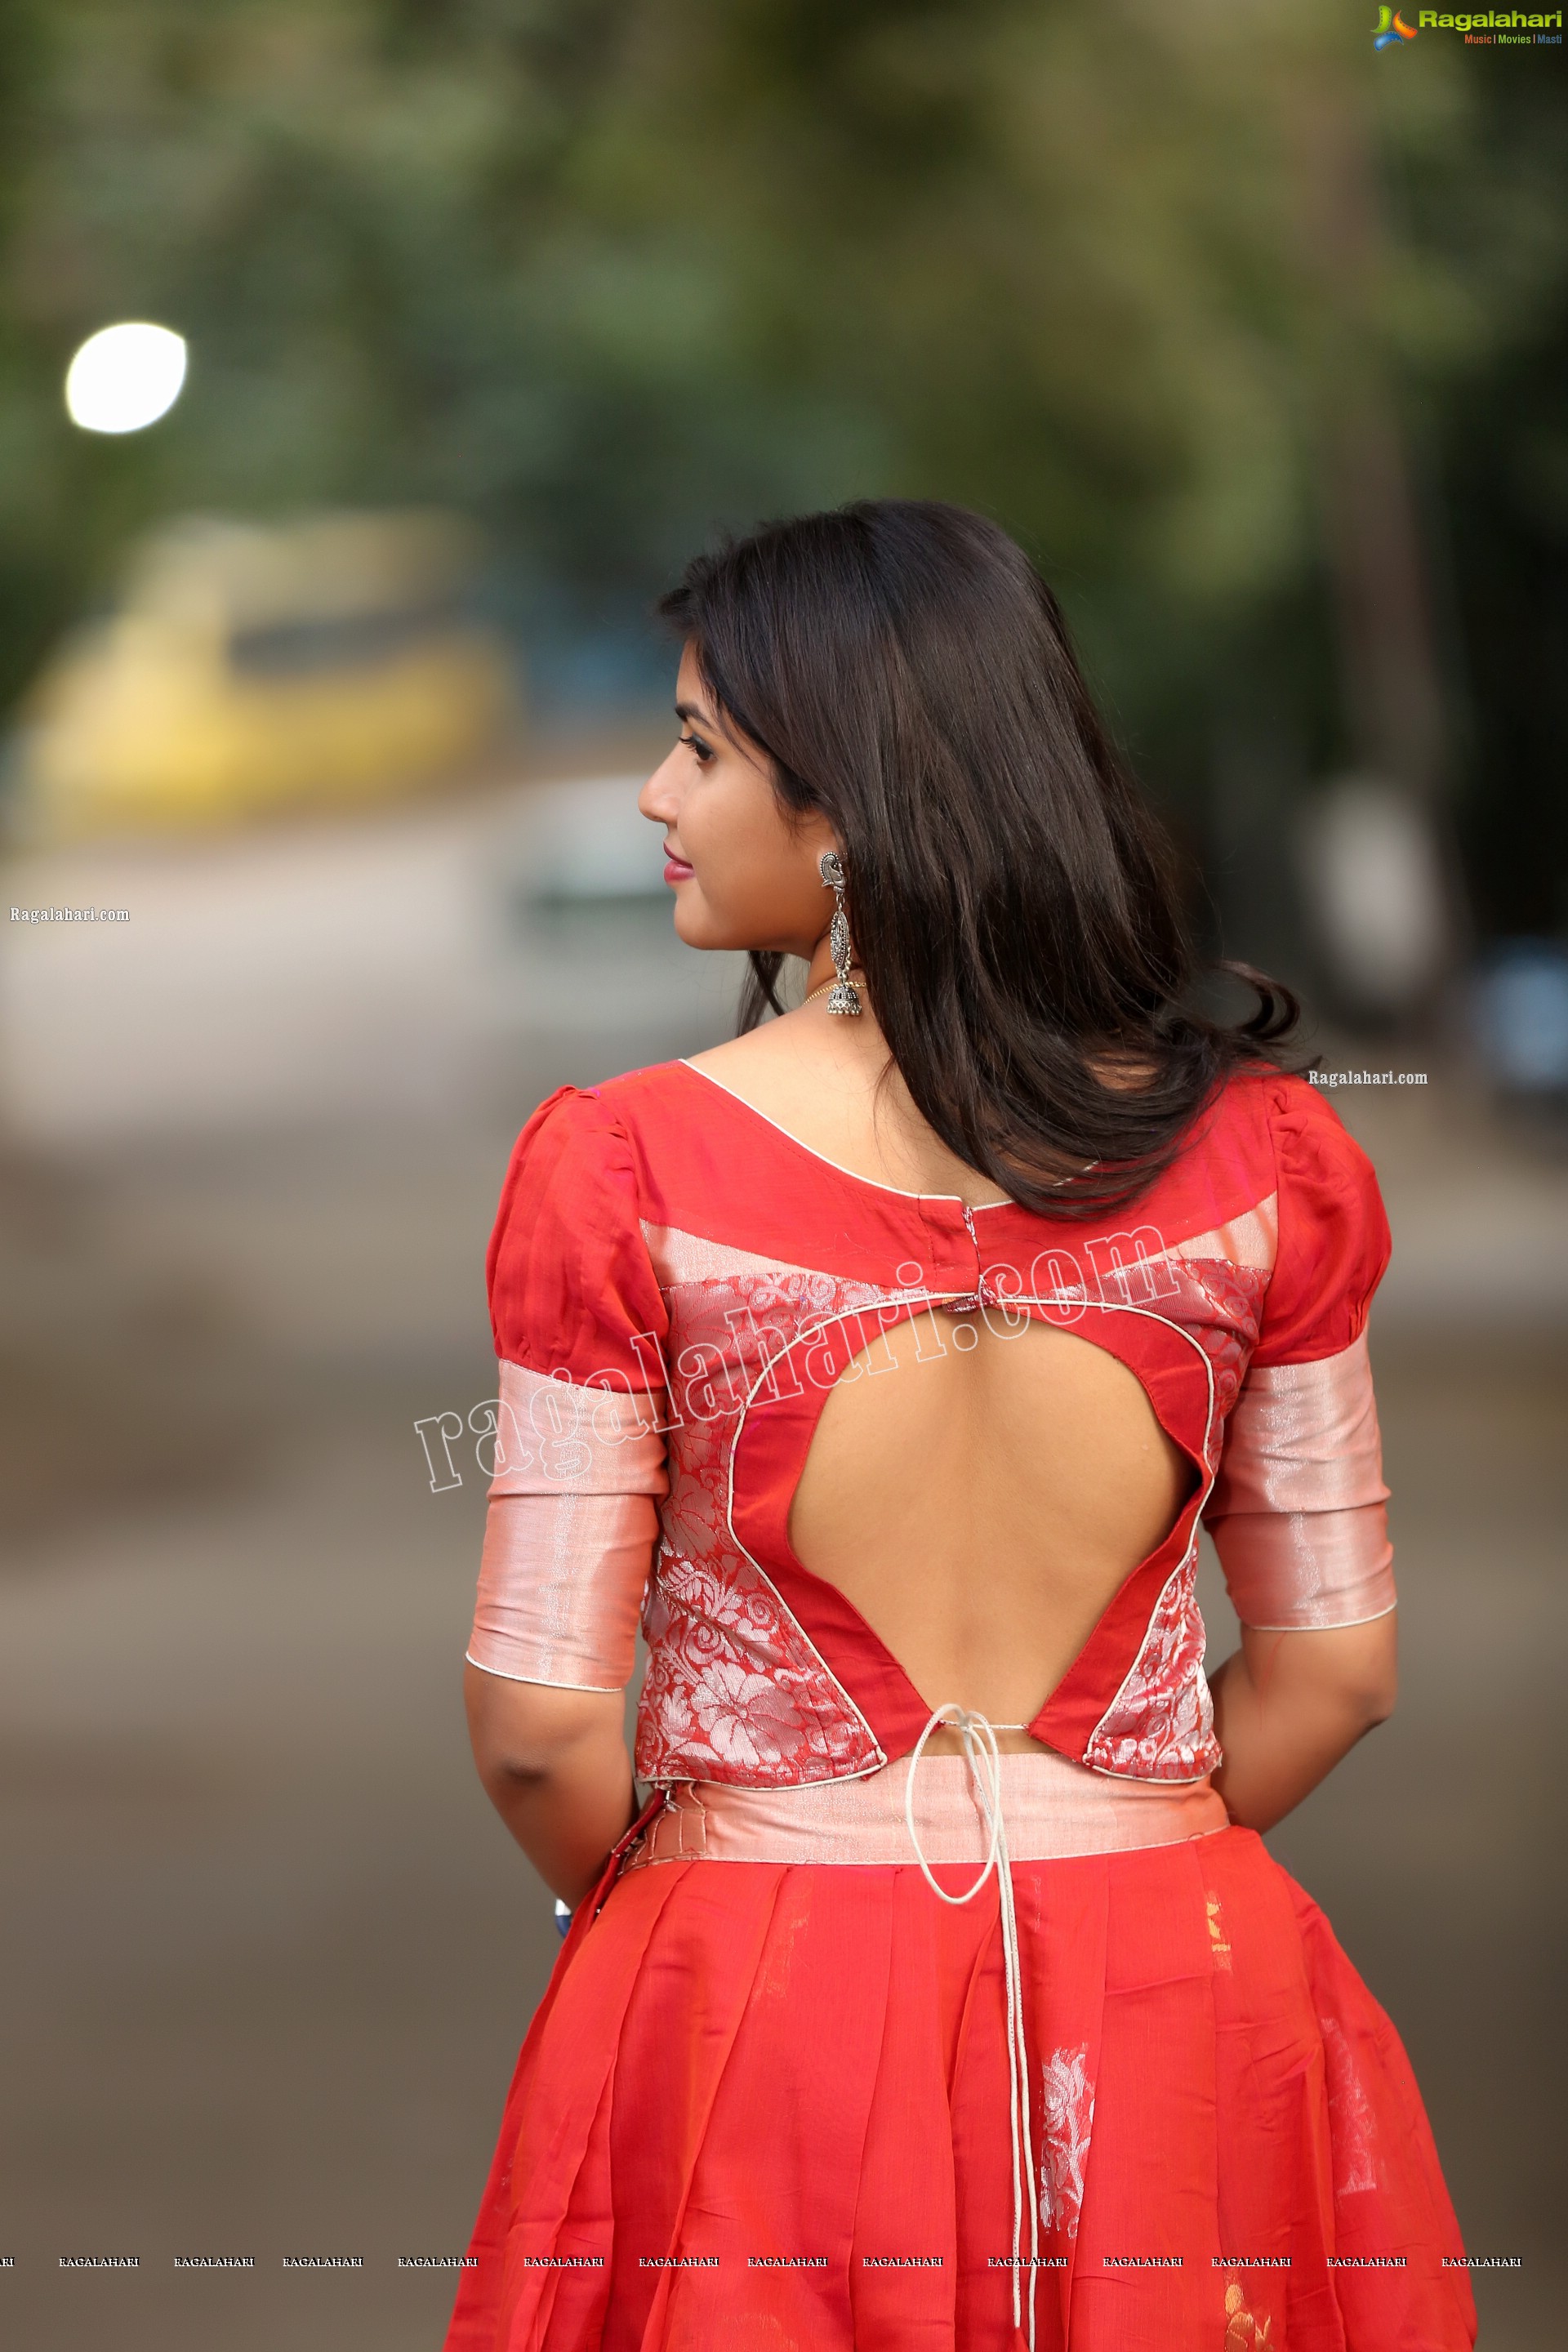 Kirthana Shiny in Red Ornate Lehenga, Exclusive Photo Shoot